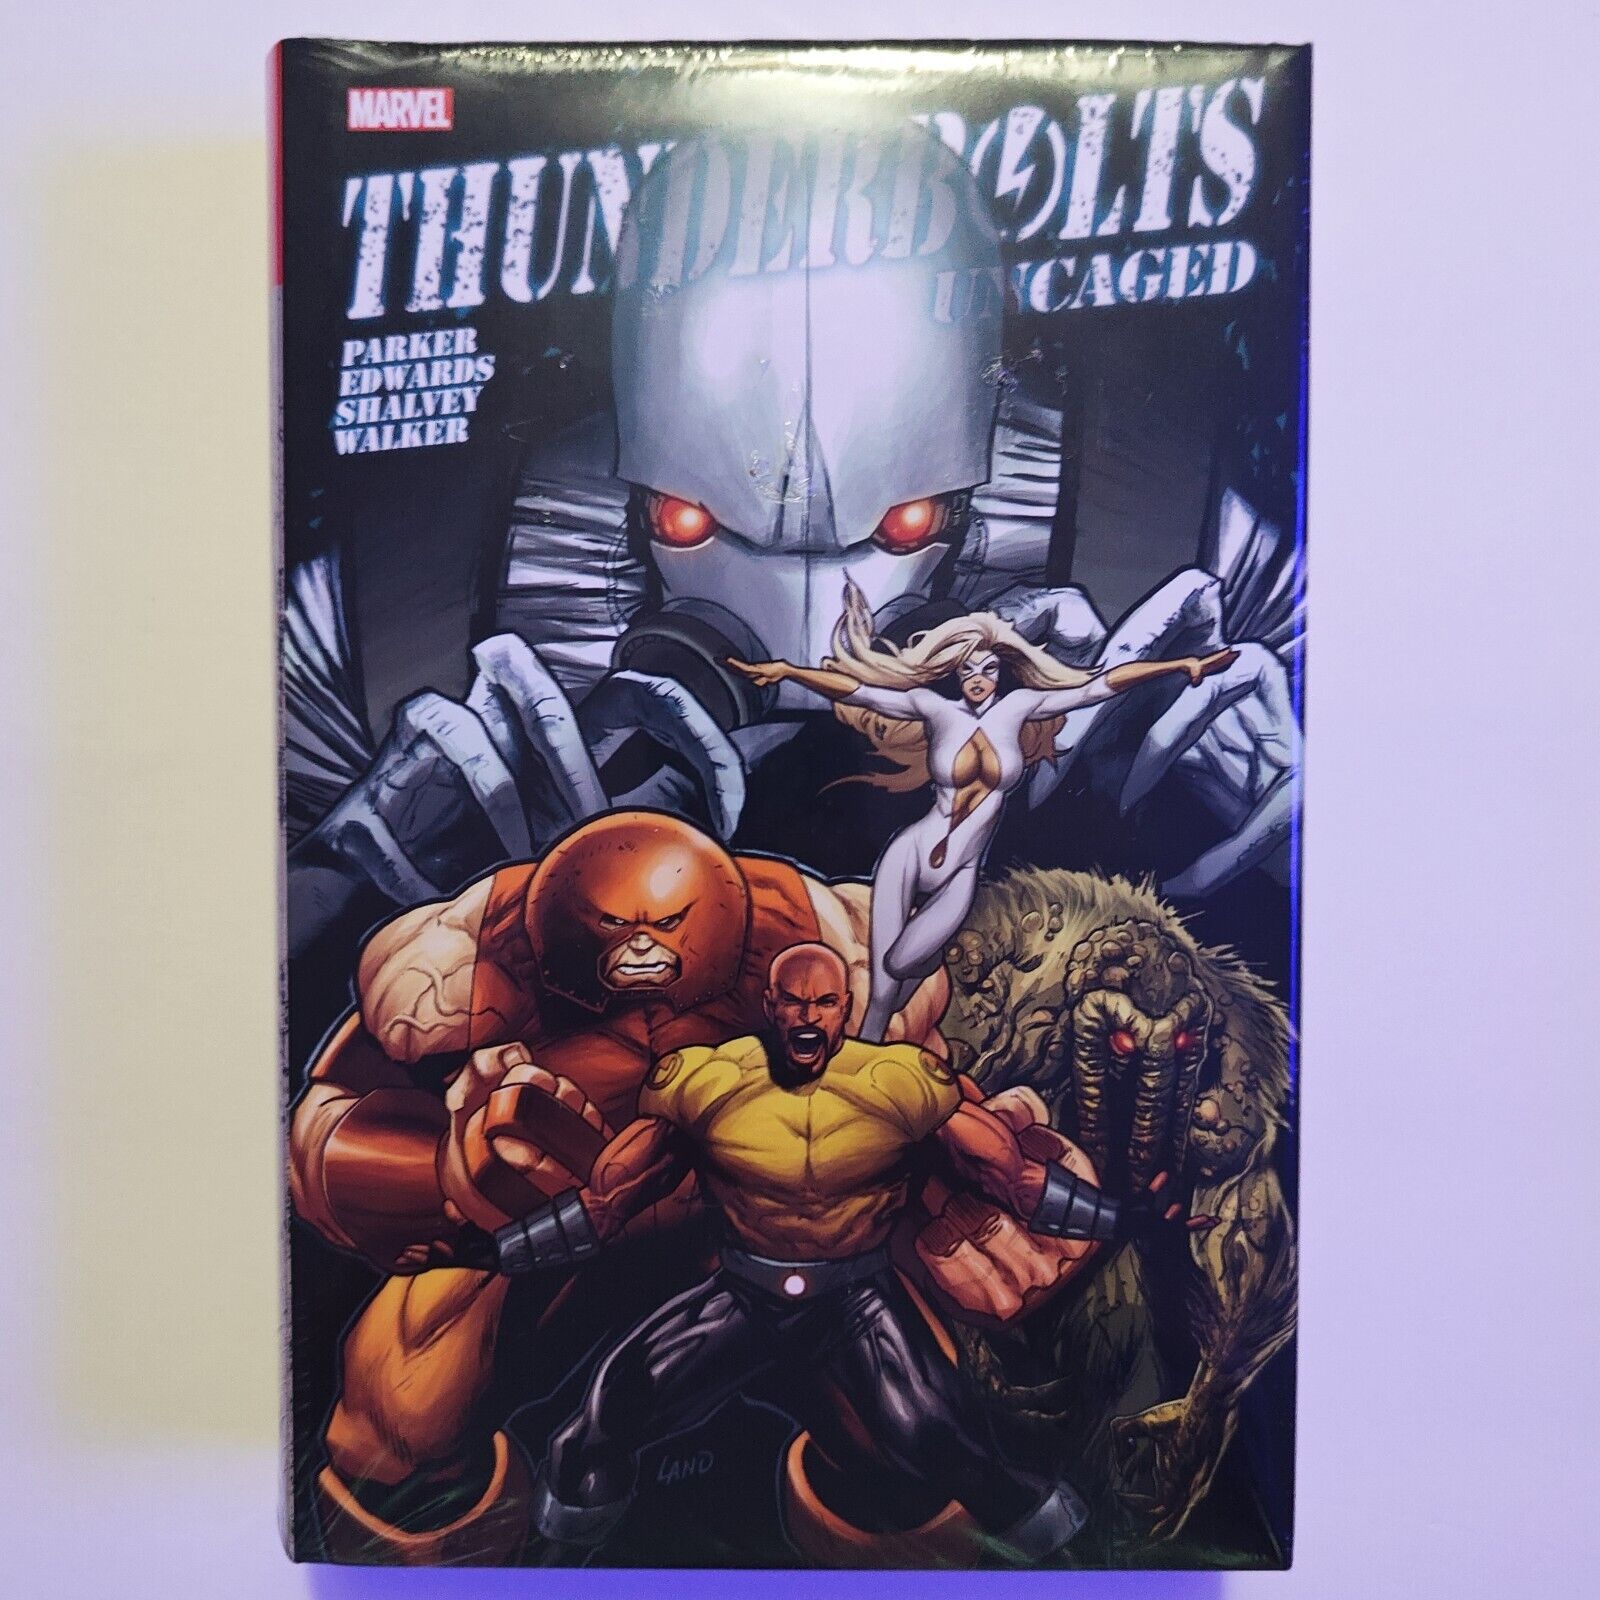 Marvel Thunderbolts Uncaged Omnibus HC (Hardcover) by Jeff Parker - NEW SEALED